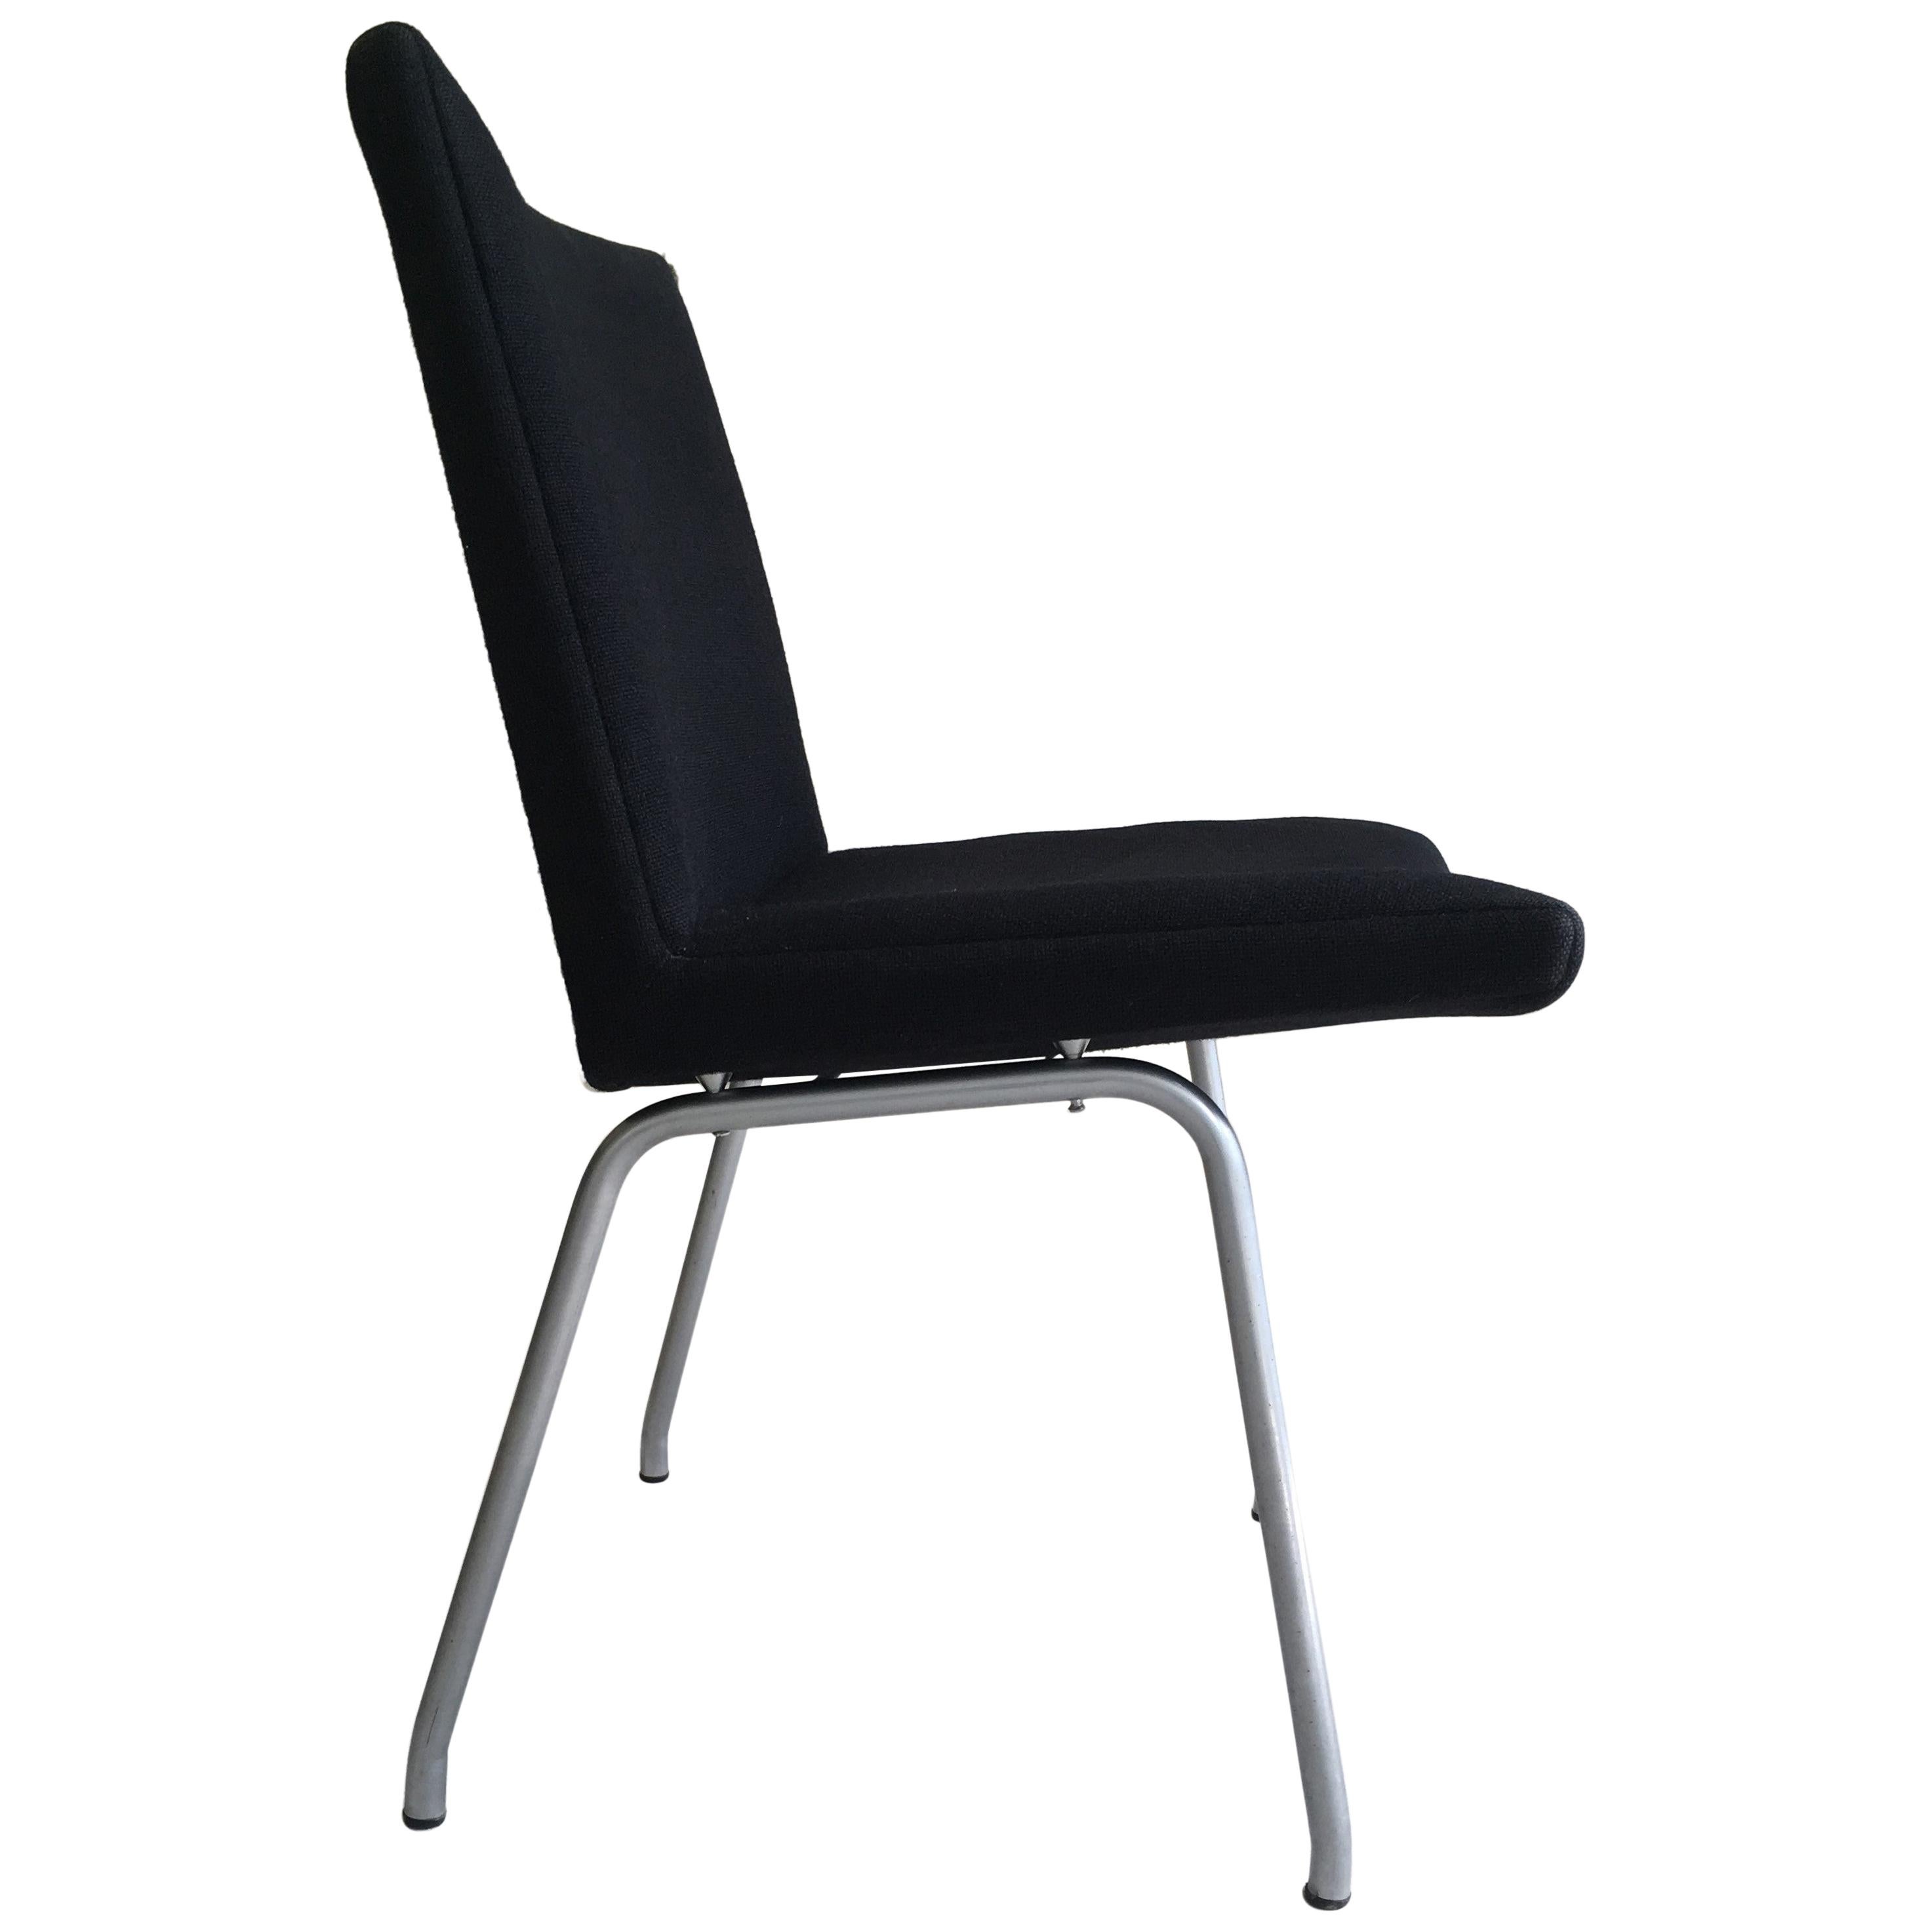 1960s Danish Hans J. Wegner Airport Chair Reupholstered in Black Fabric For Sale